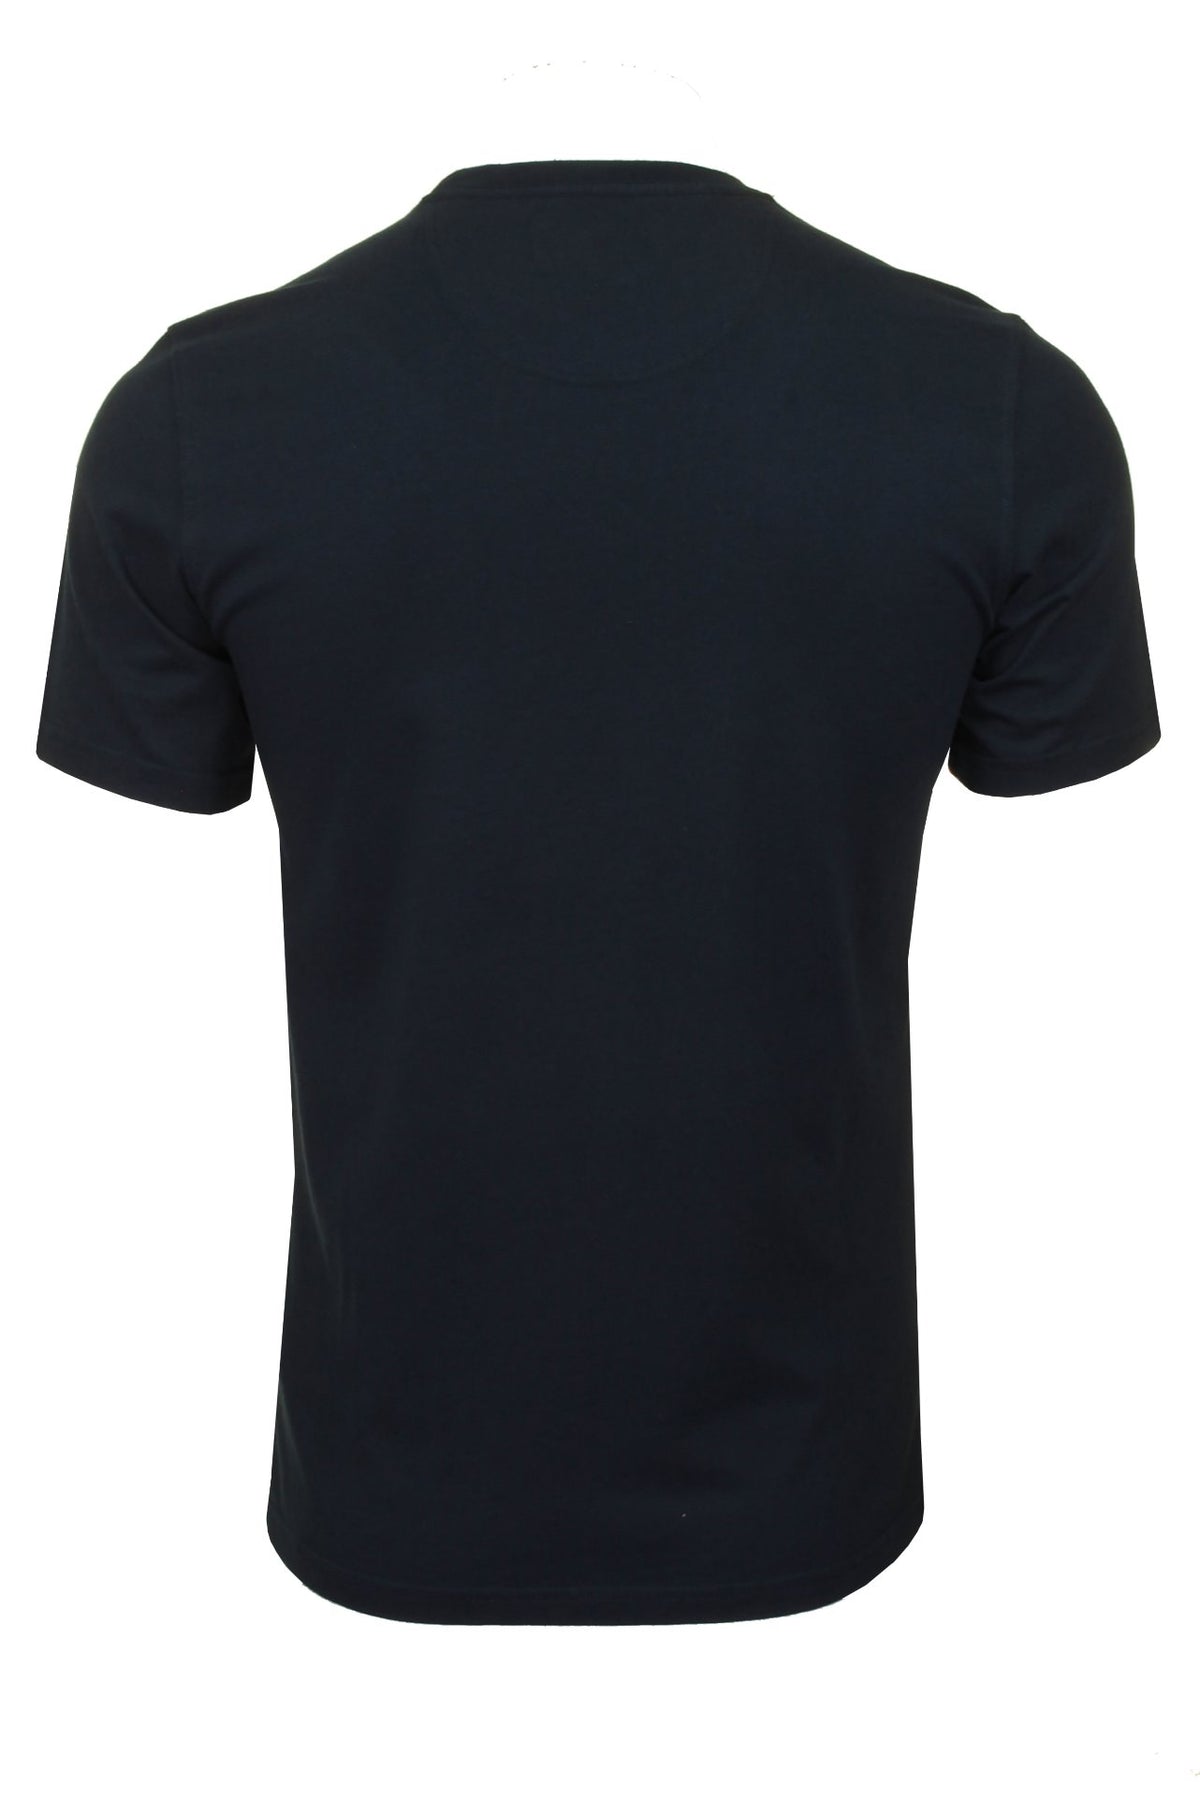 Barbour Men's Sports T-Shirt - Short Sleeved, 03, Mts0331, Navy